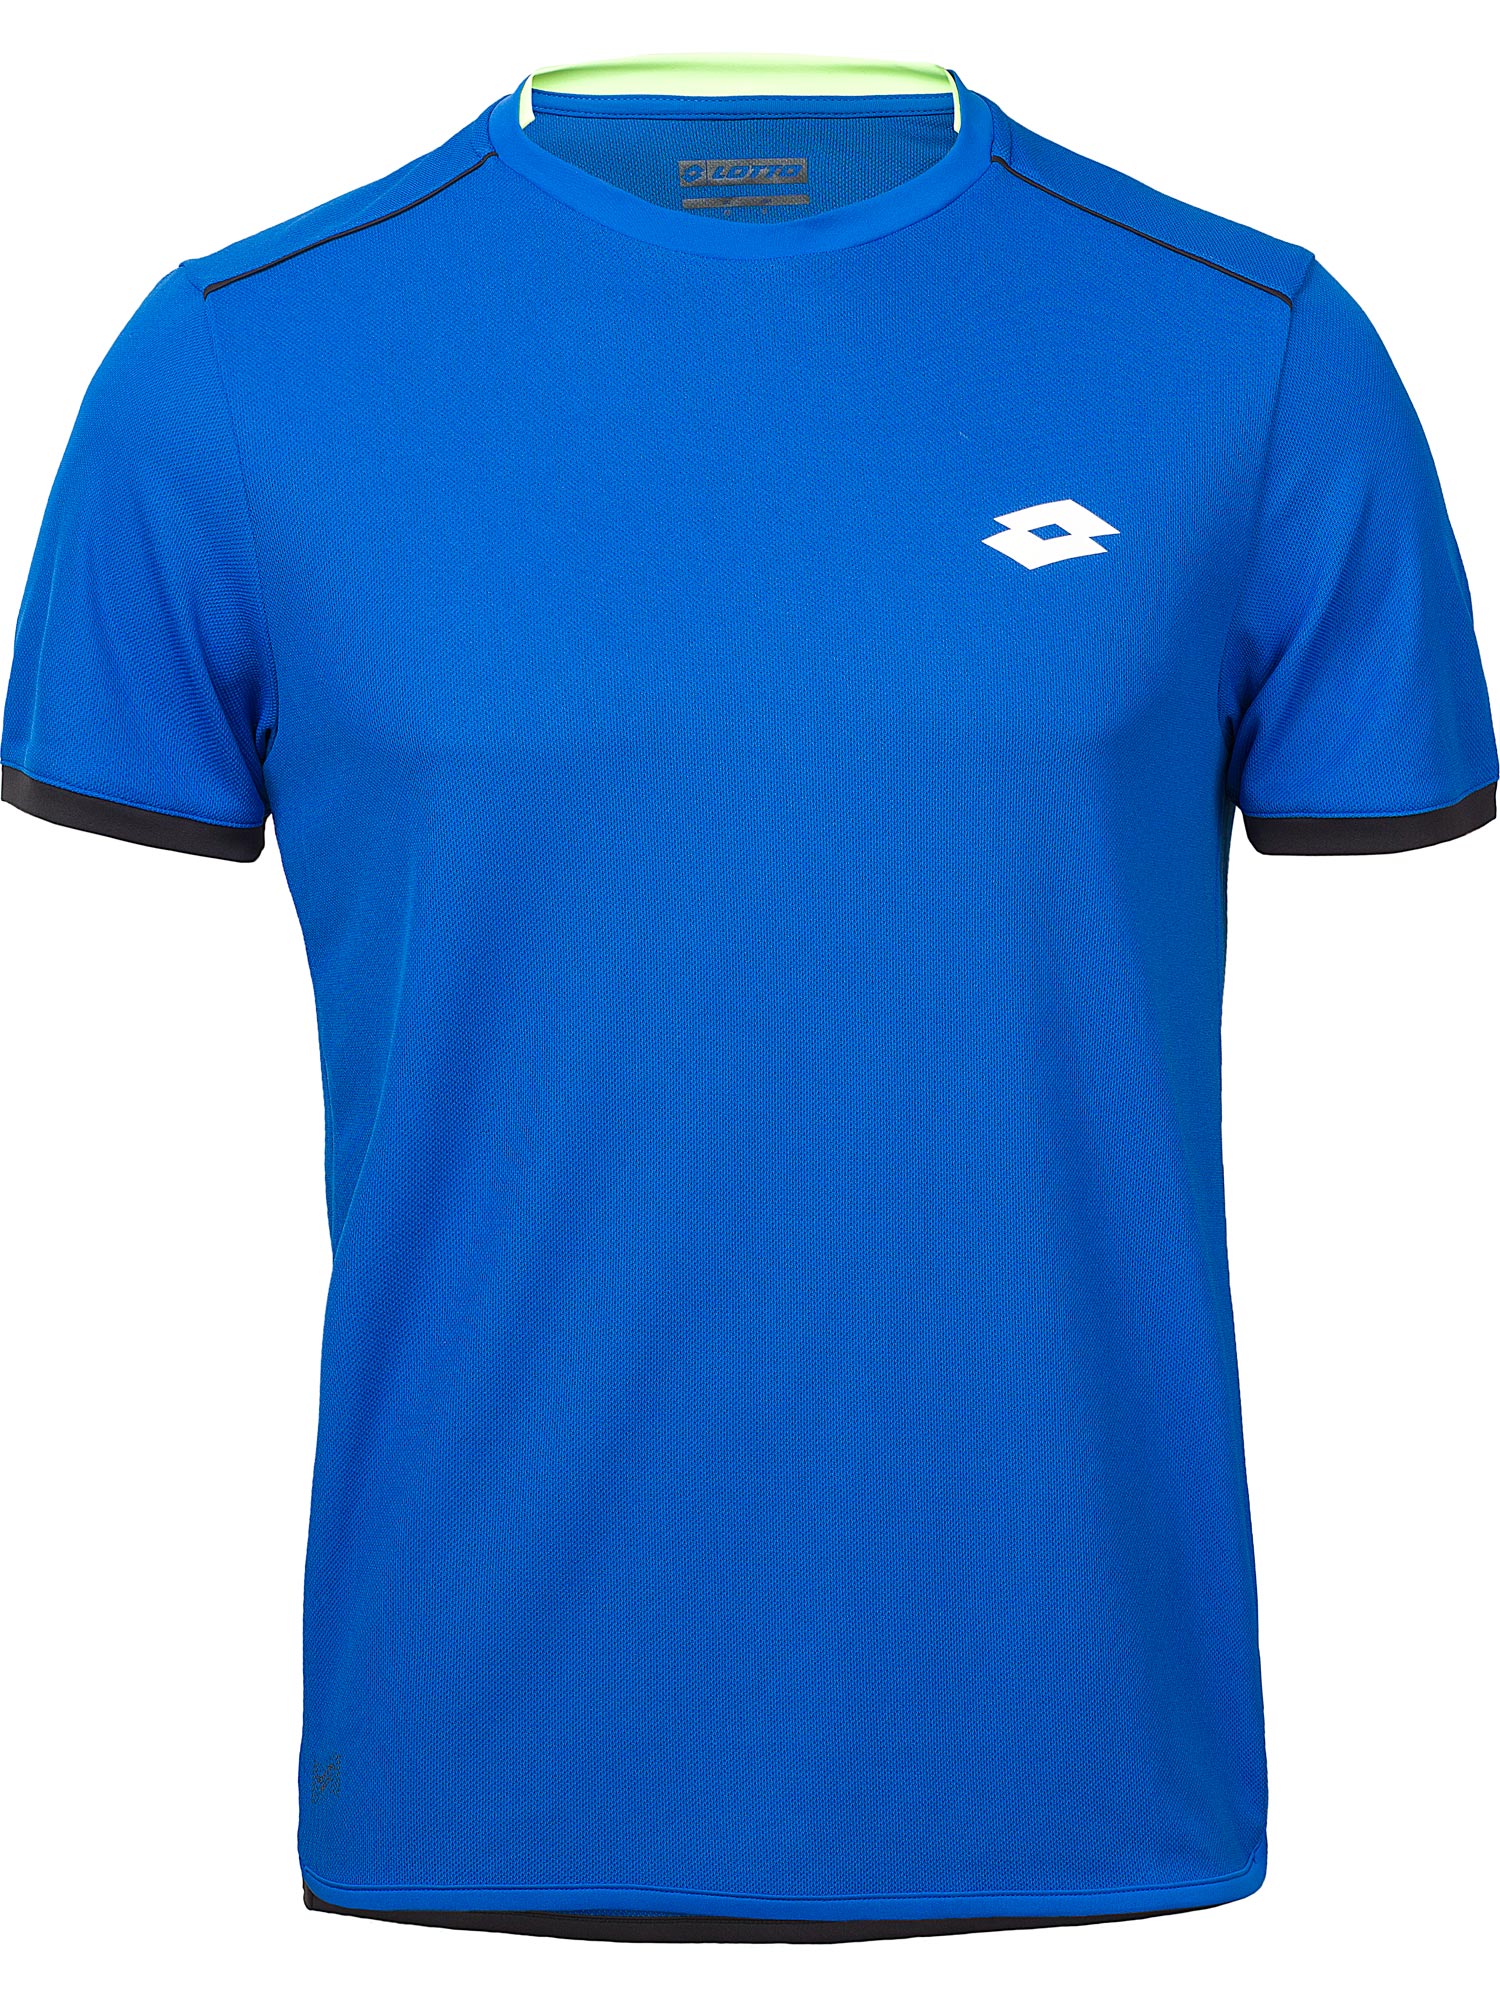 Теннисная футболка LOTTO AYDEX IV TEE. Фото ¹5